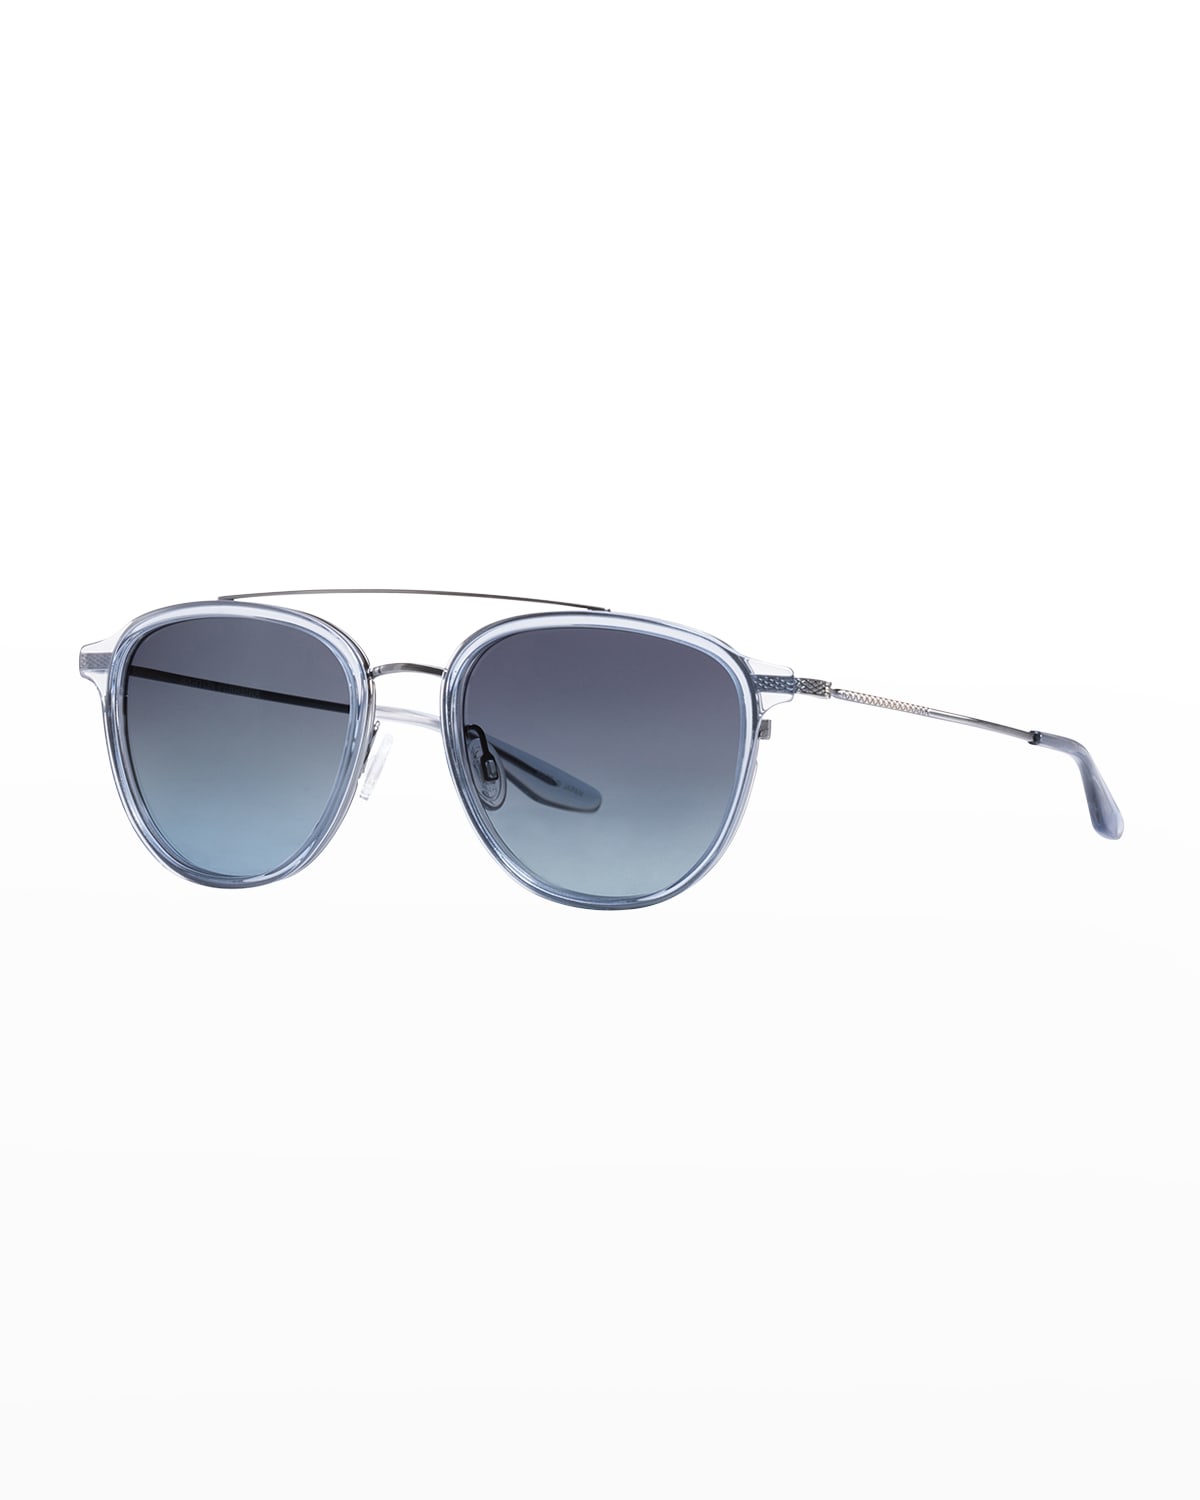 Barton Perreira Men's Courtier Double-Bridge Aviator Sunglasses